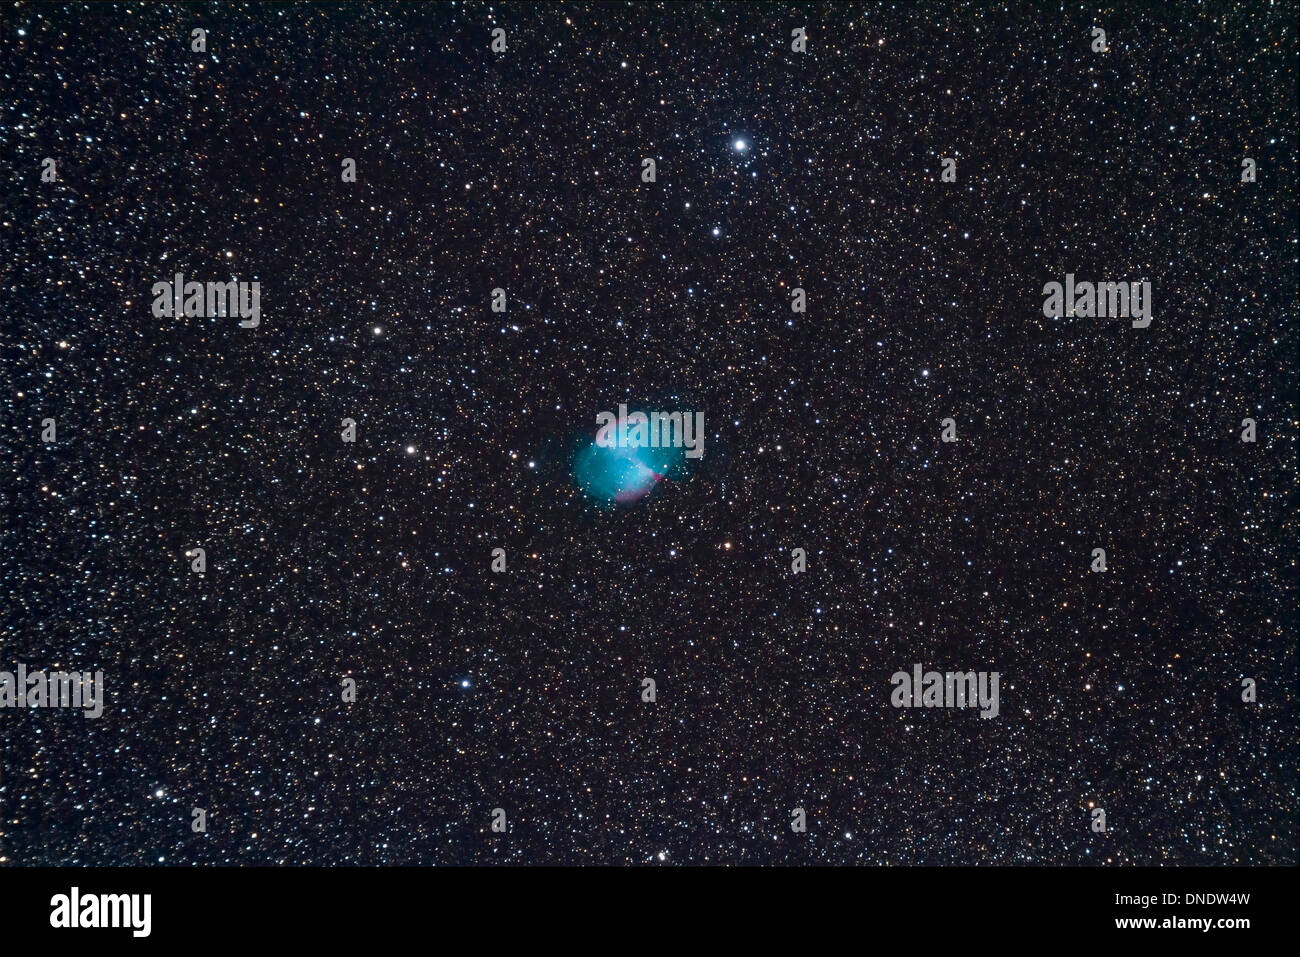 Dumbbell Nebula - The Planets